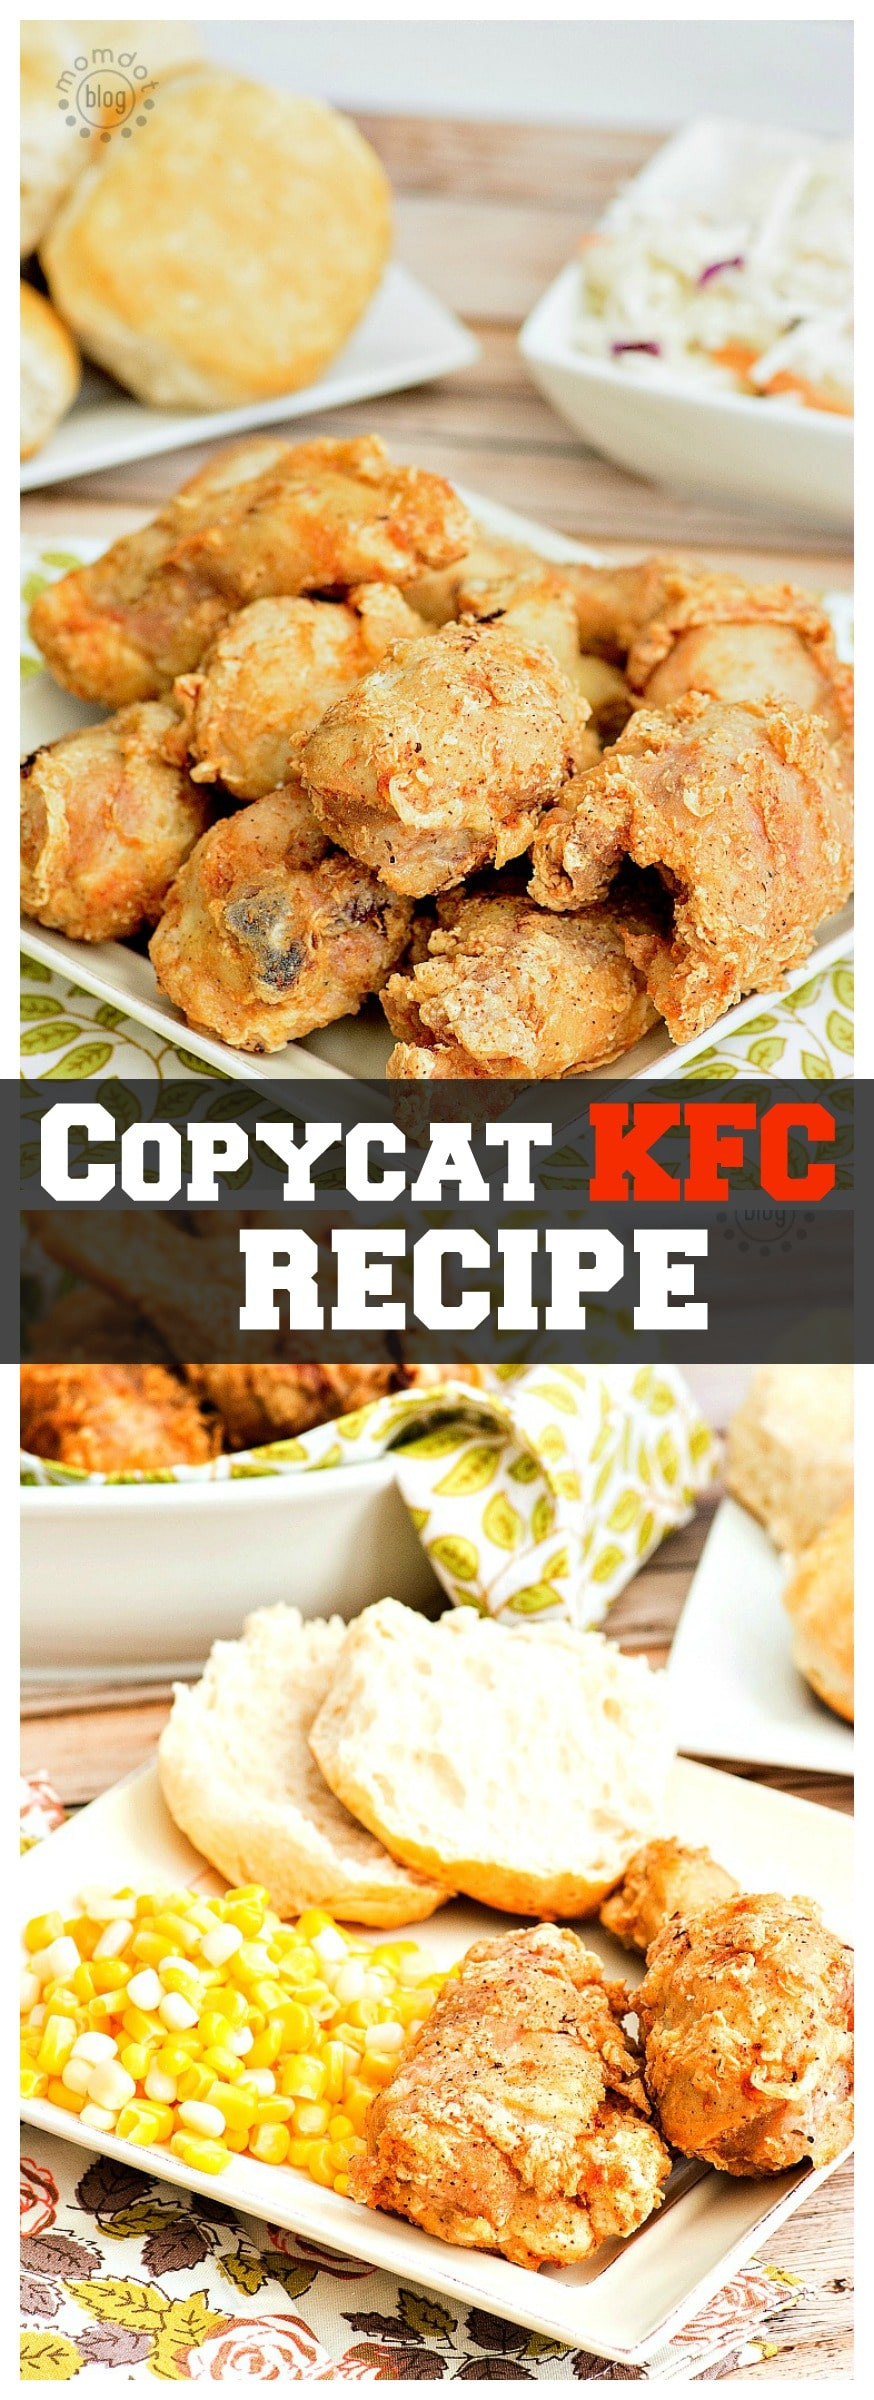 Kfc Original Recipe Chicken Whole Wing
 Copycat KFC Original Chicken Recipe